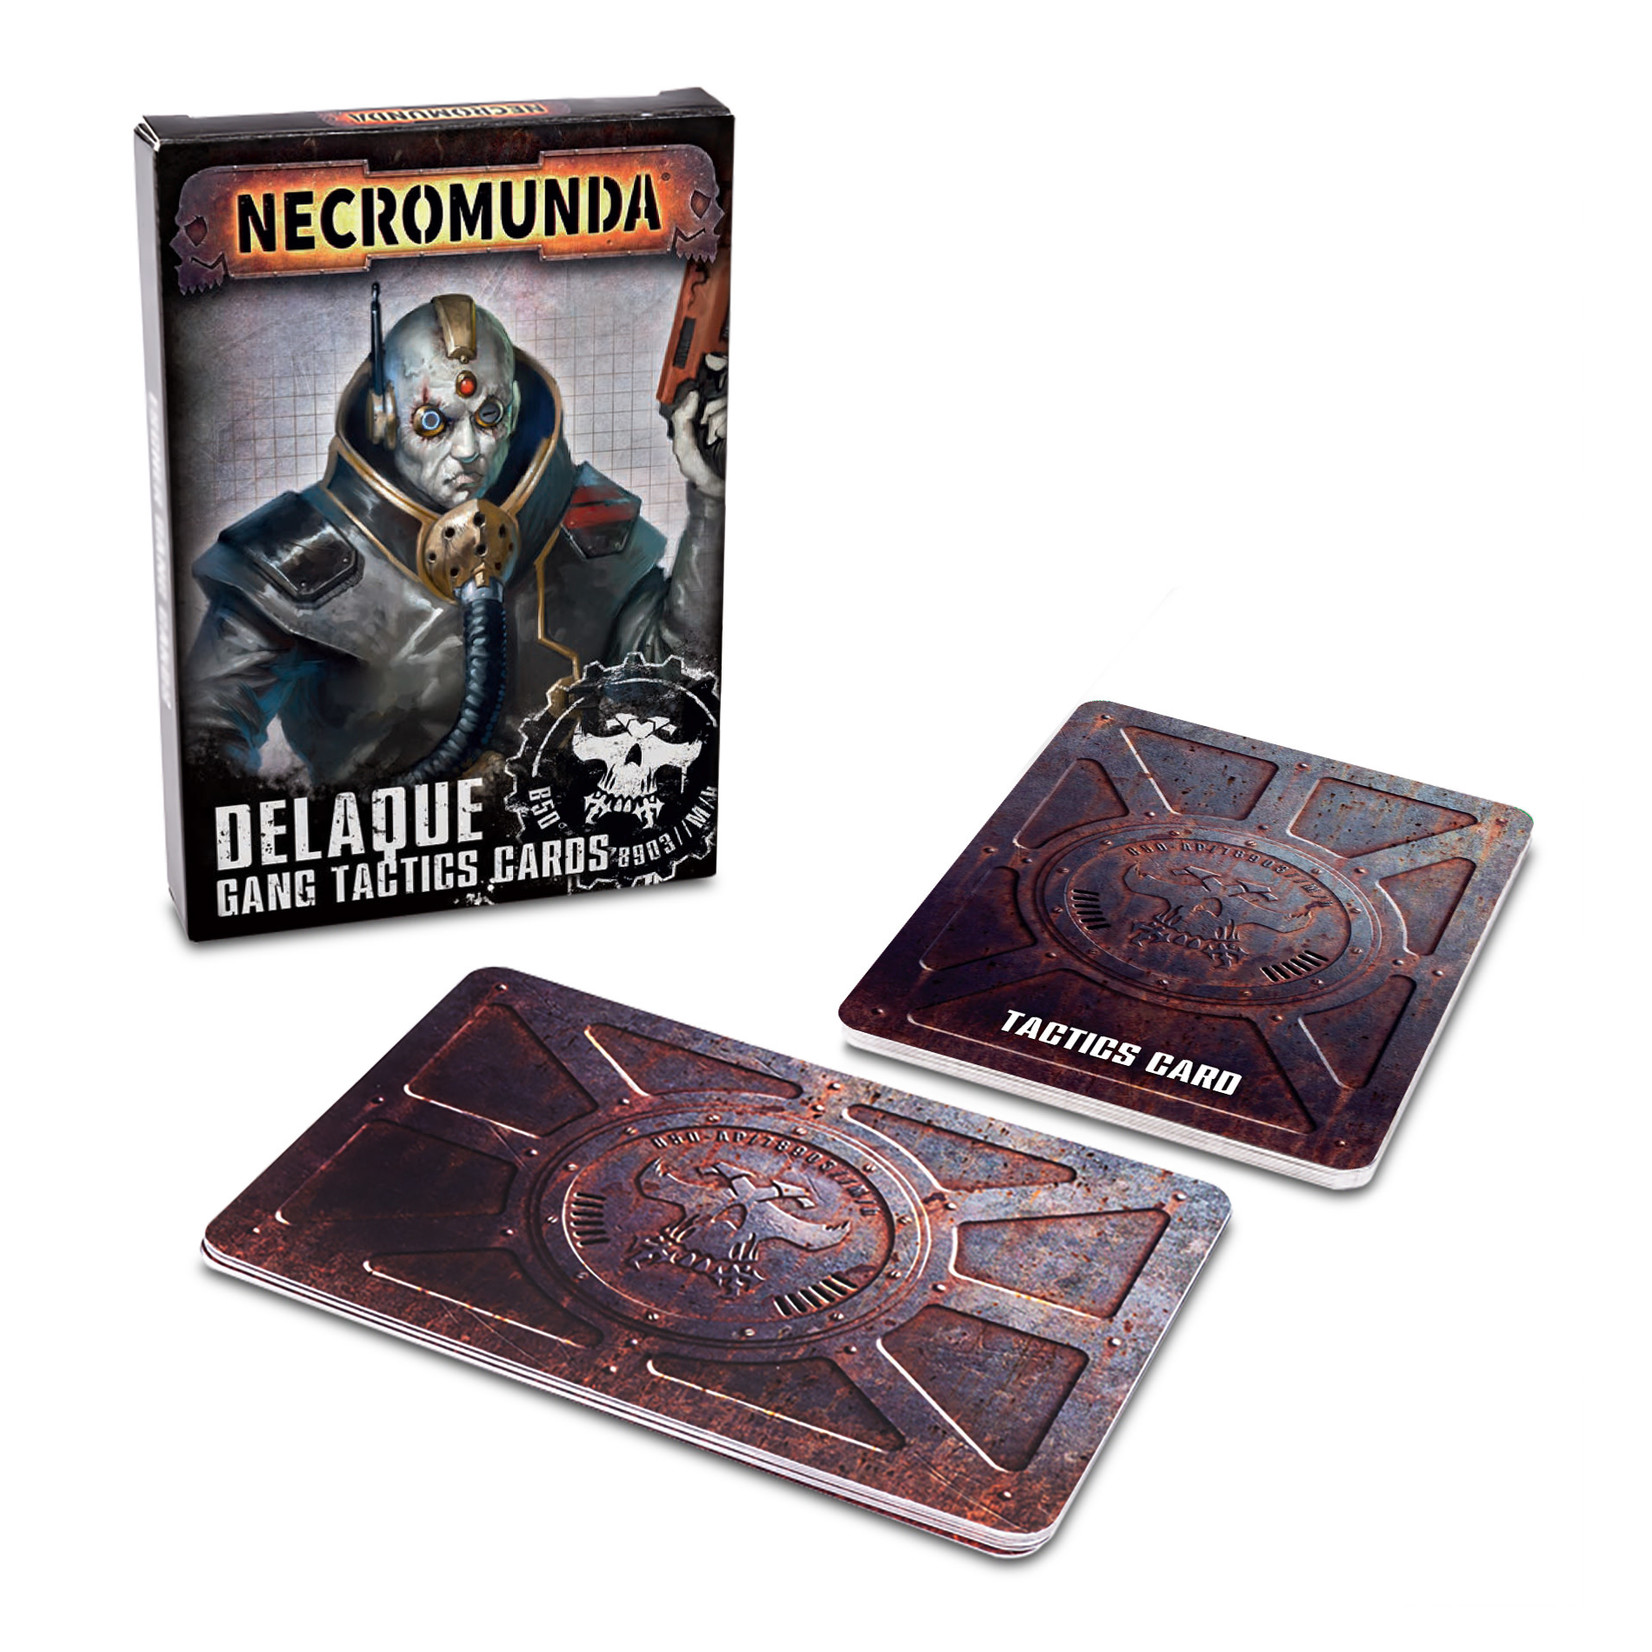 Necromunda: Delaque Gang Tactic Cards